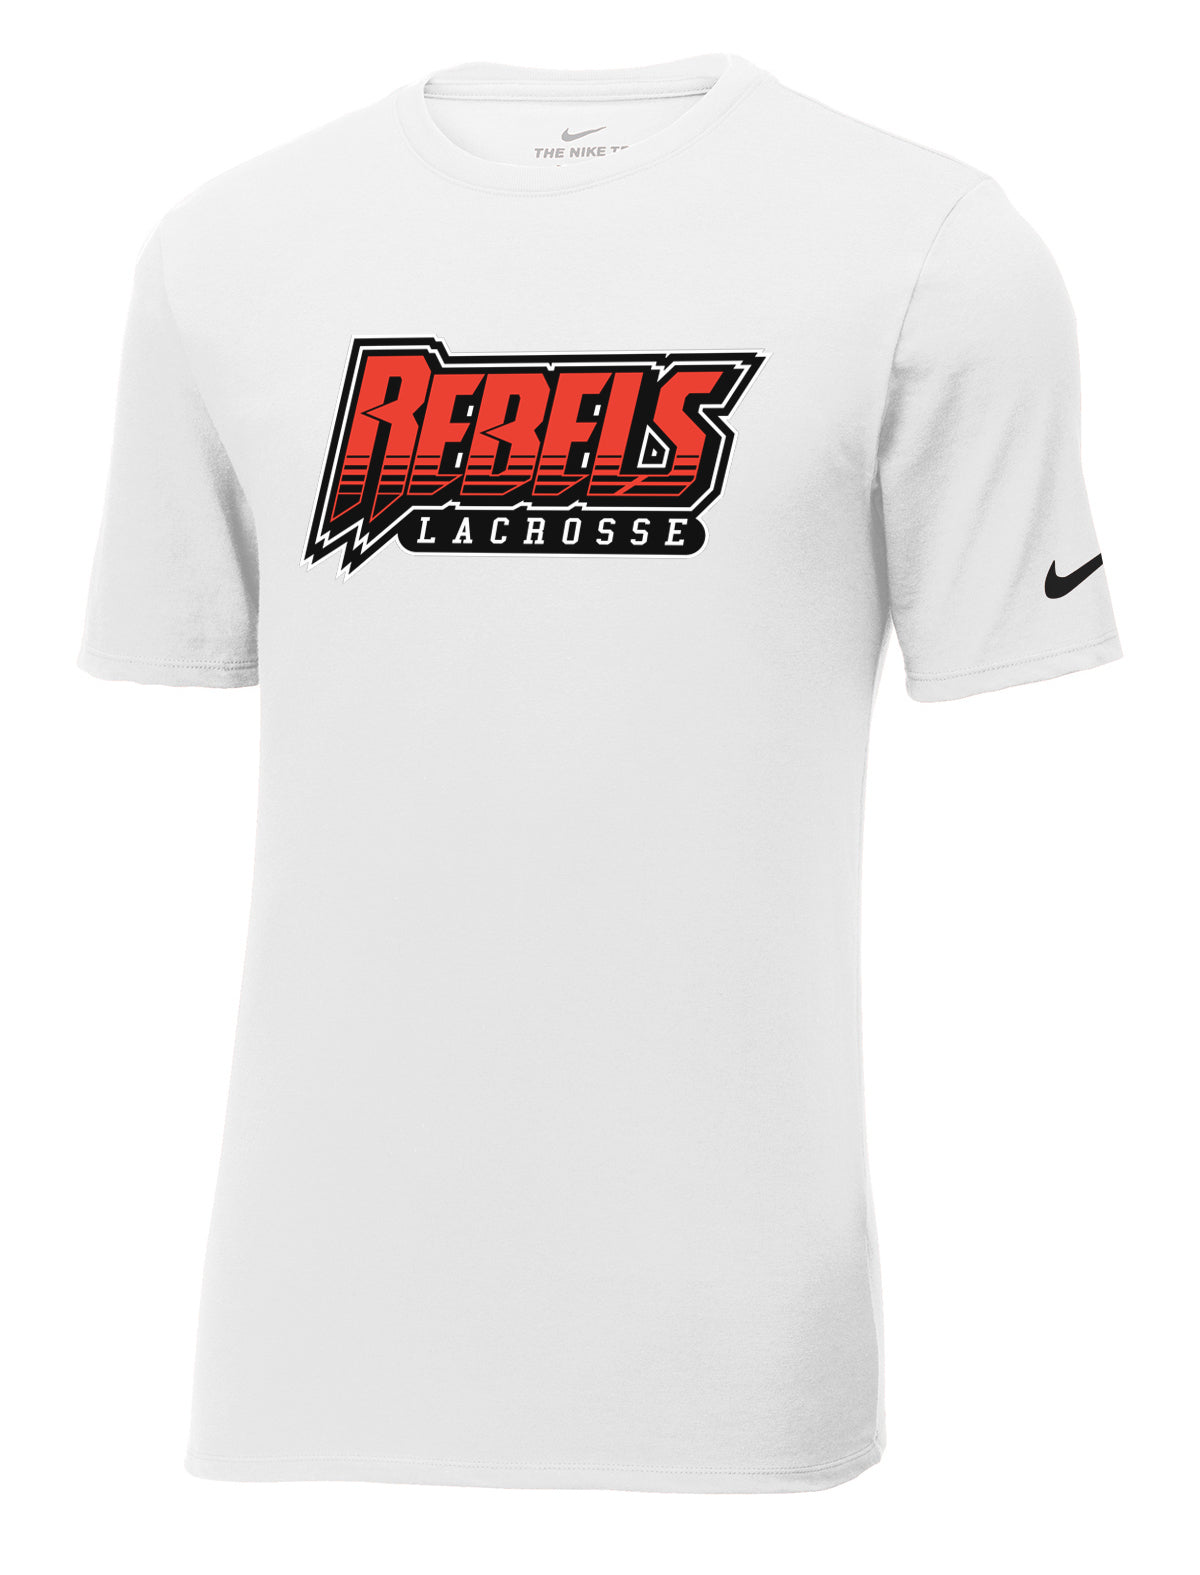 Rebels Lacrosse White Nike Core Cotton Tee